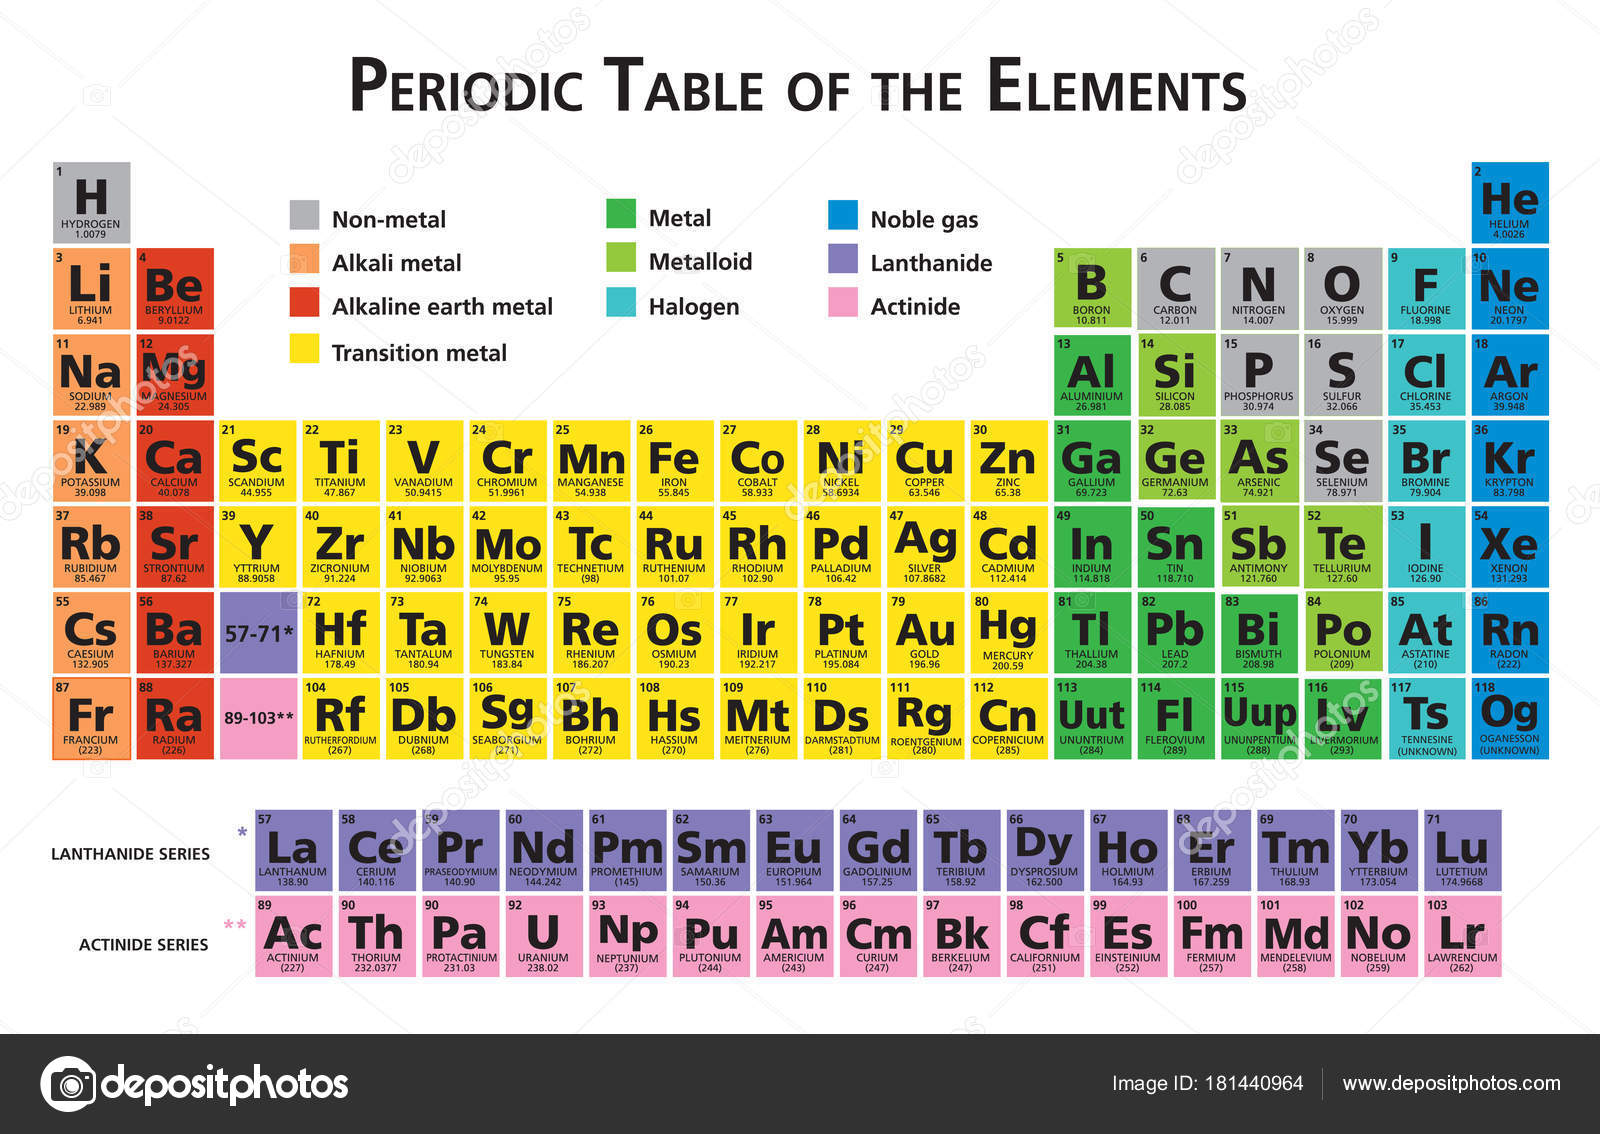 Th химический элемент. Periodic Table of Chemical elements Mendeleev. Таблица Менделеева 118 химических элементов. Менделеев таблица 118 элементов Оганесон. Таблица Менделеева на английском.